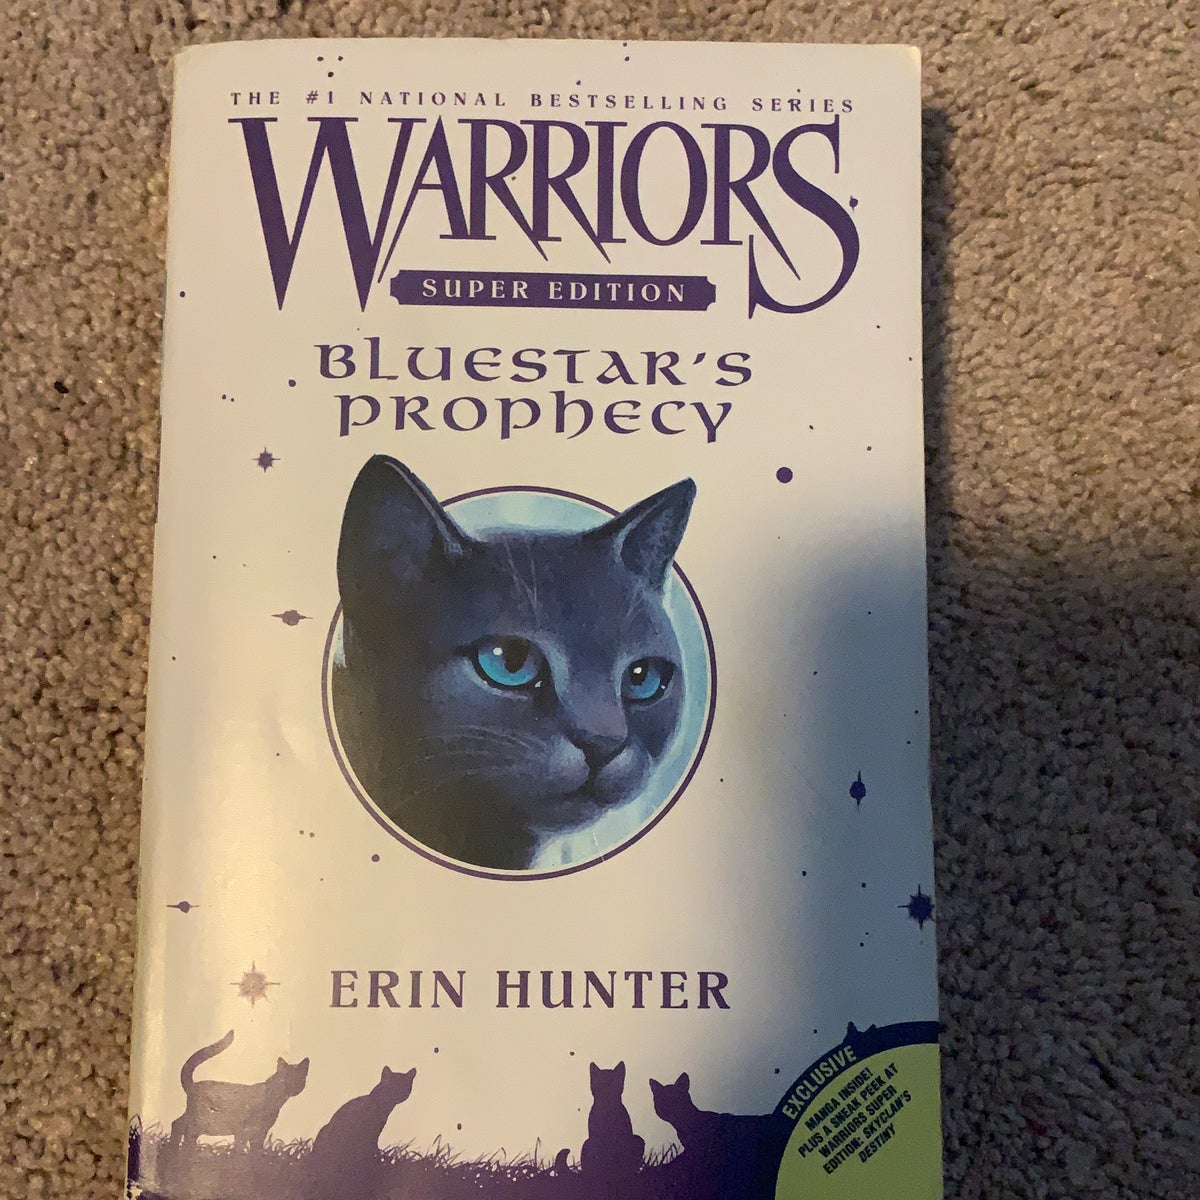 Warrior Cats, Warrior book series, Blue Star retro sunset